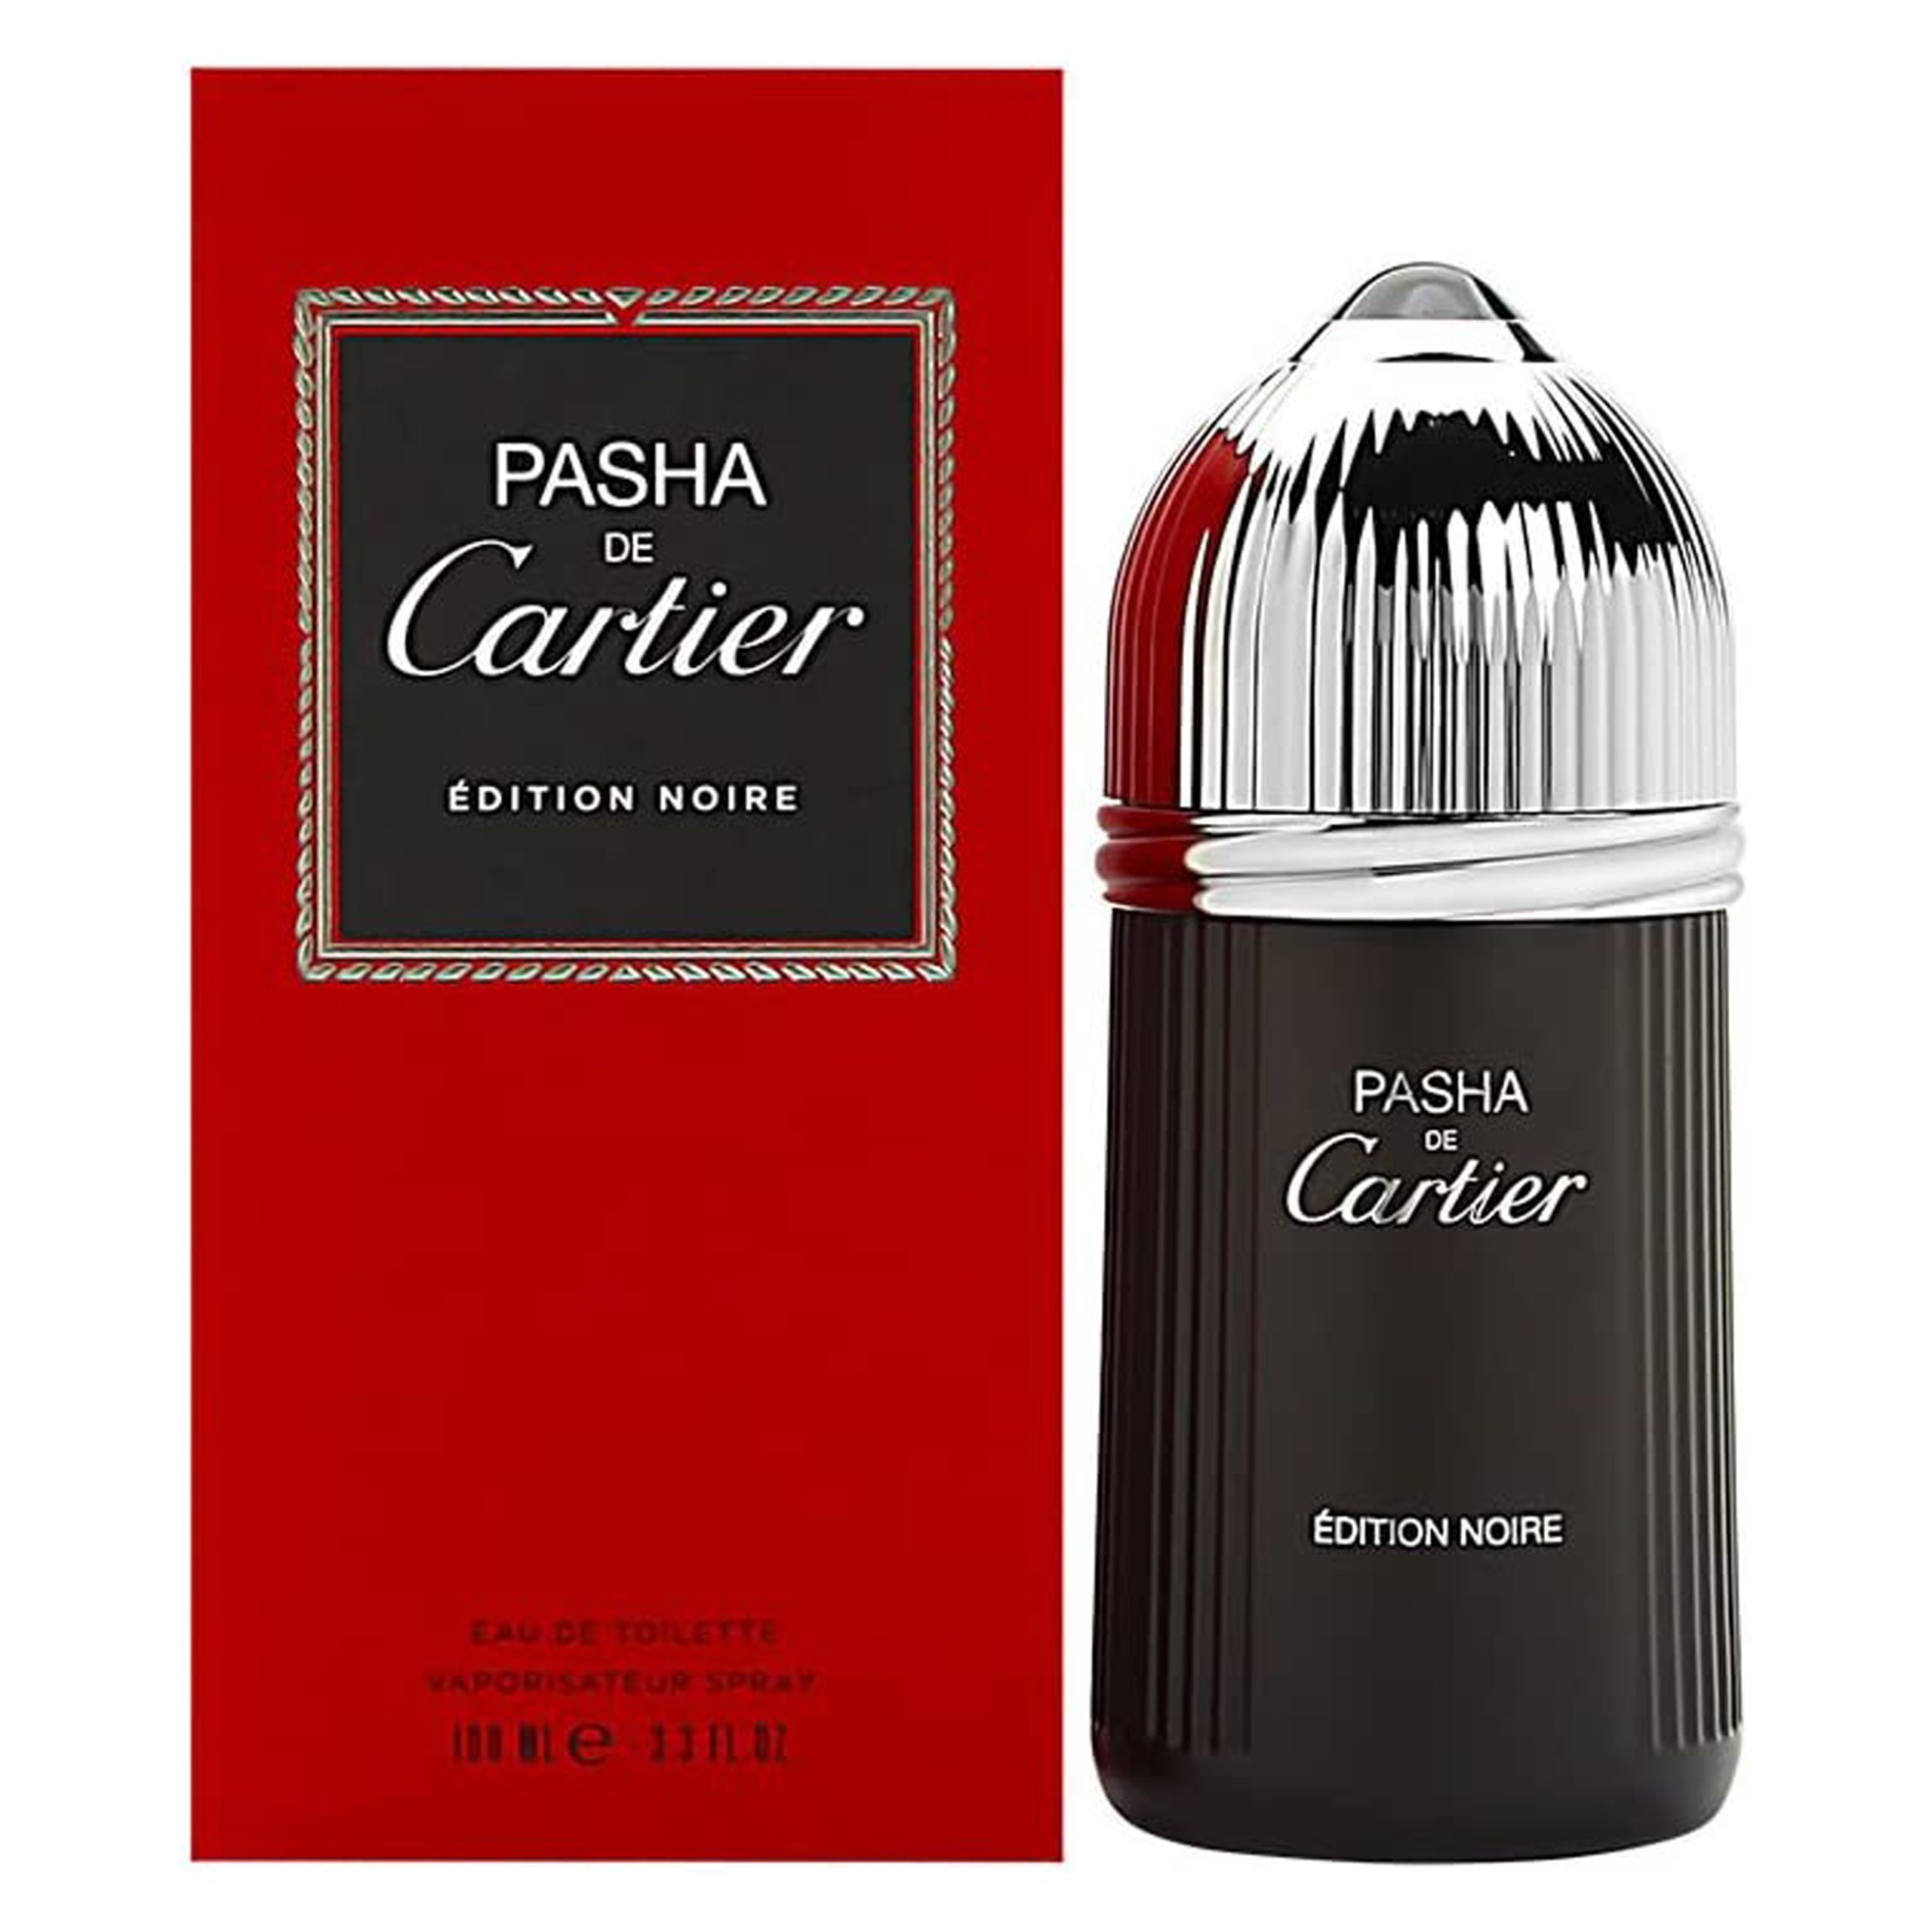 ادکلن مردانه کارتیر پاشا ادیشن نویر Pasha De Cartier Edition Noire by Cartier